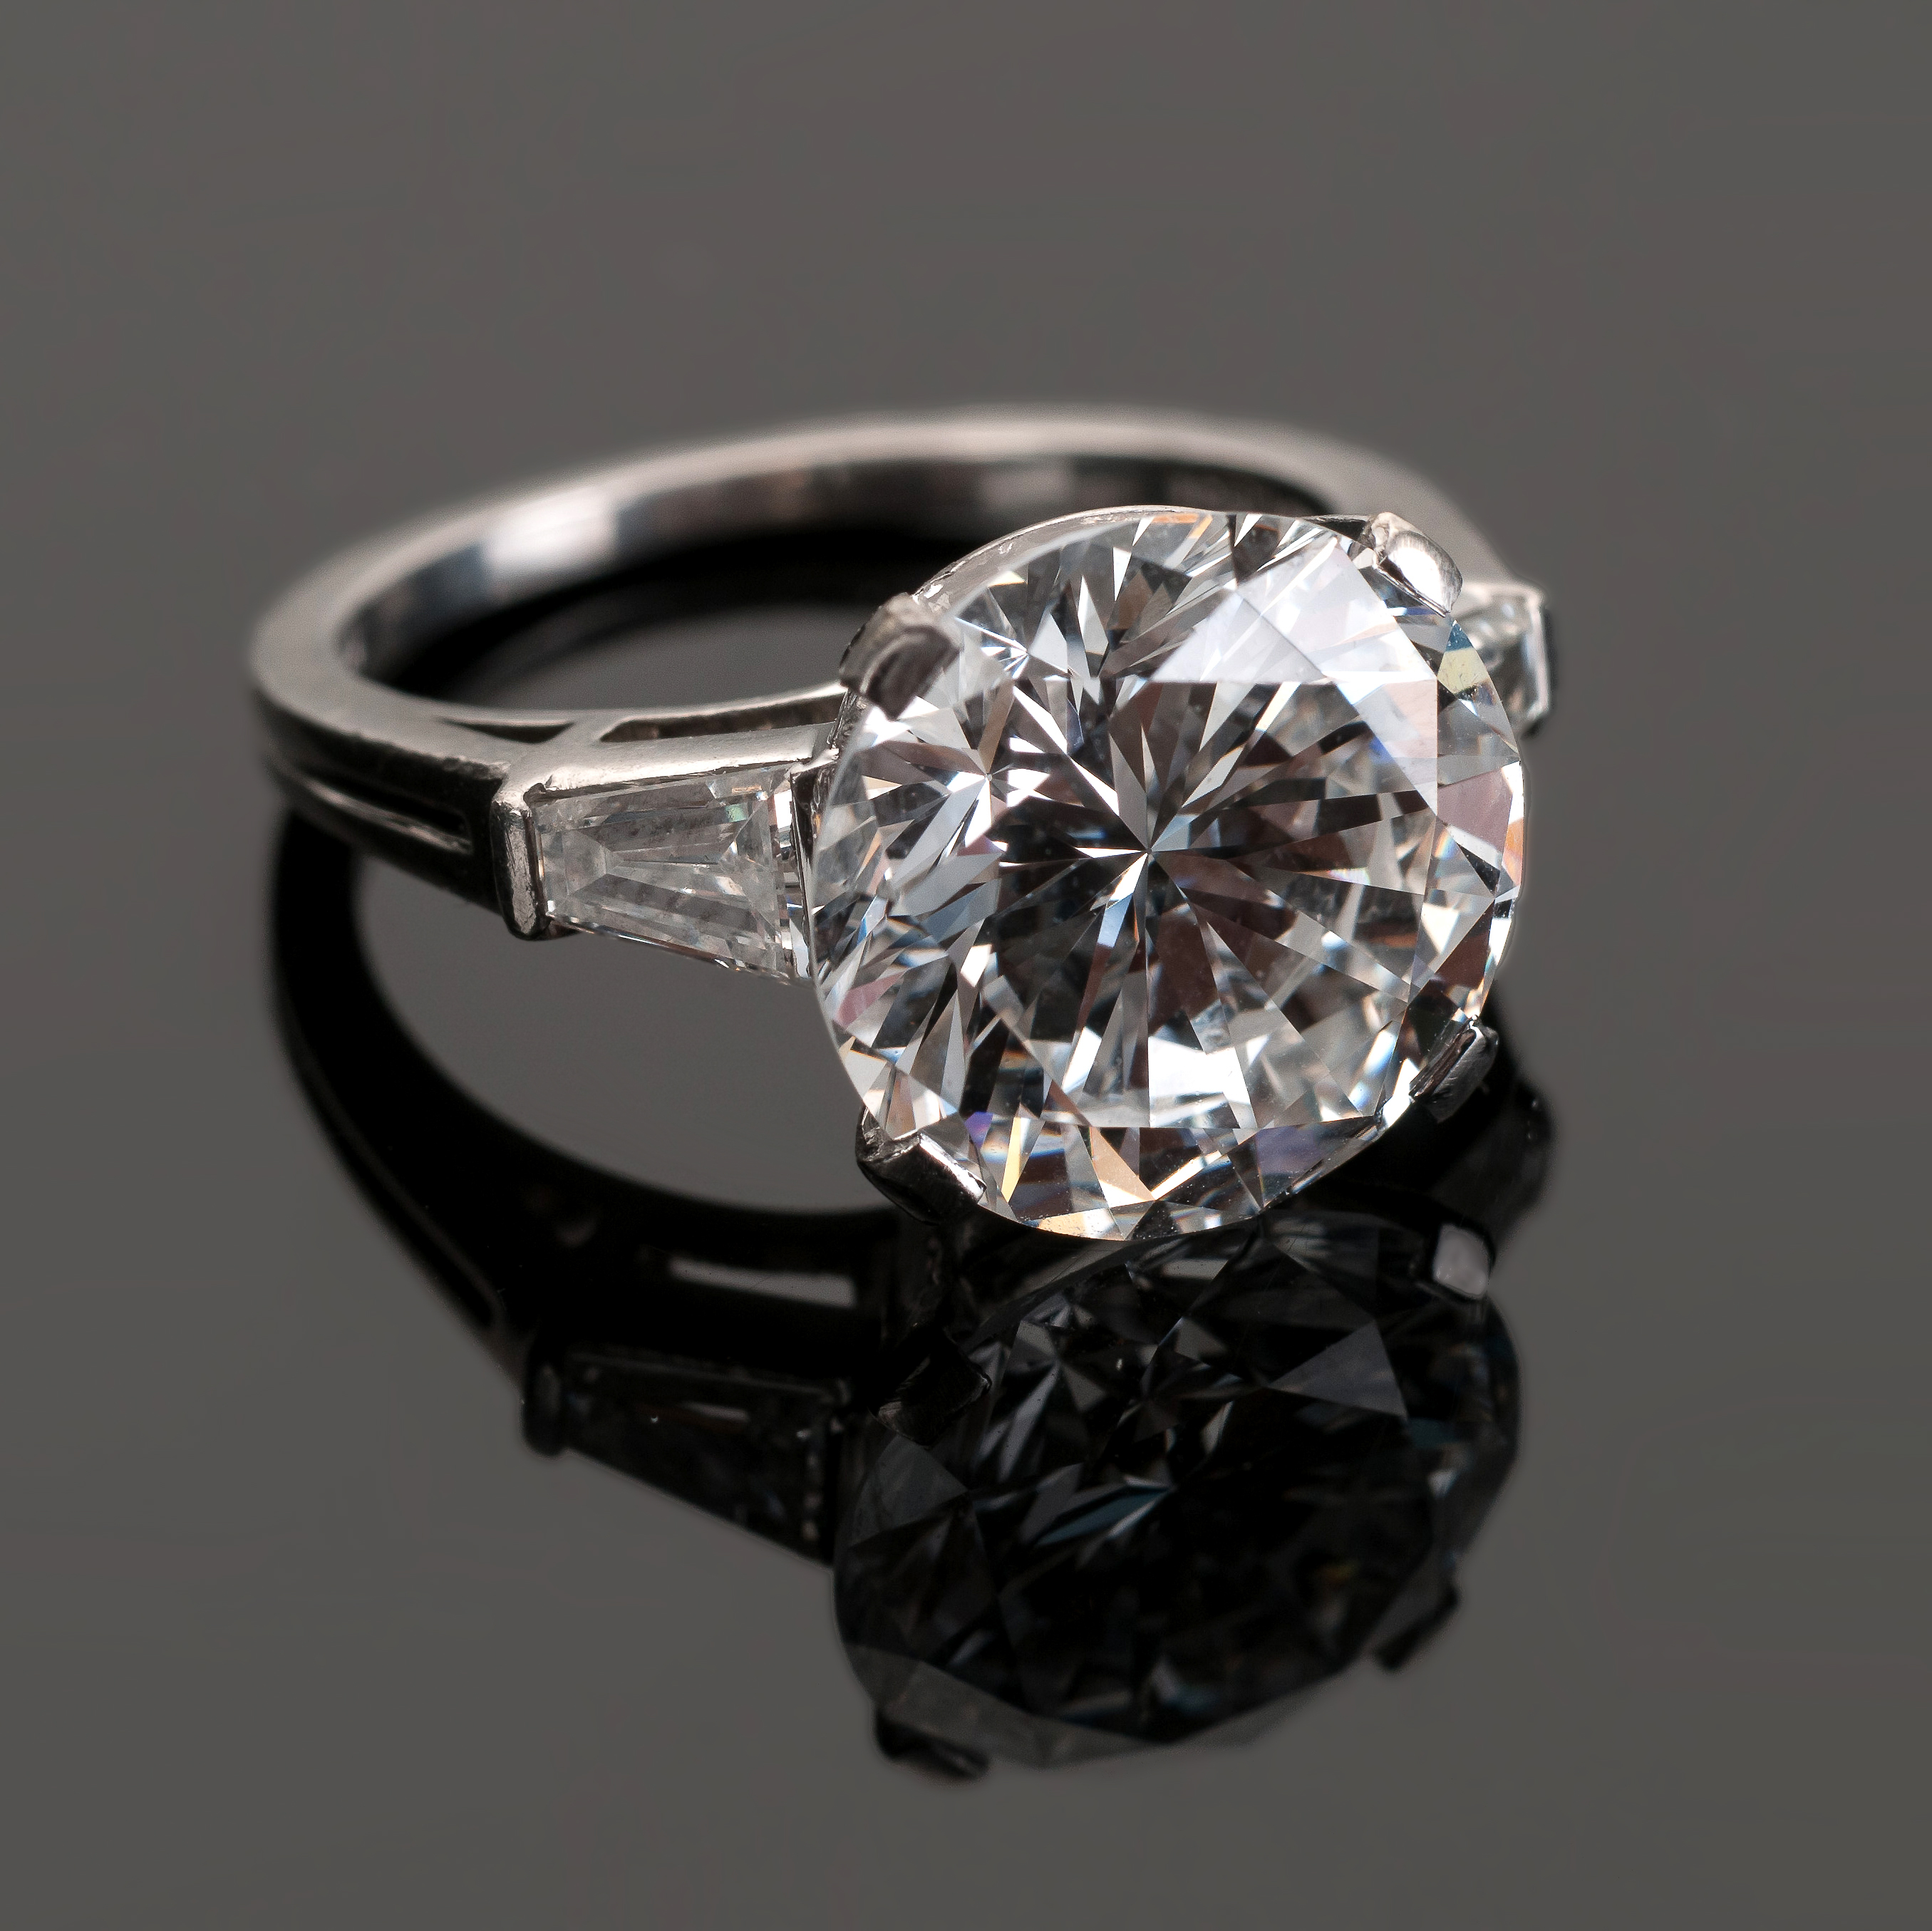 5.25 Carat Diamond Ring – Lofty 